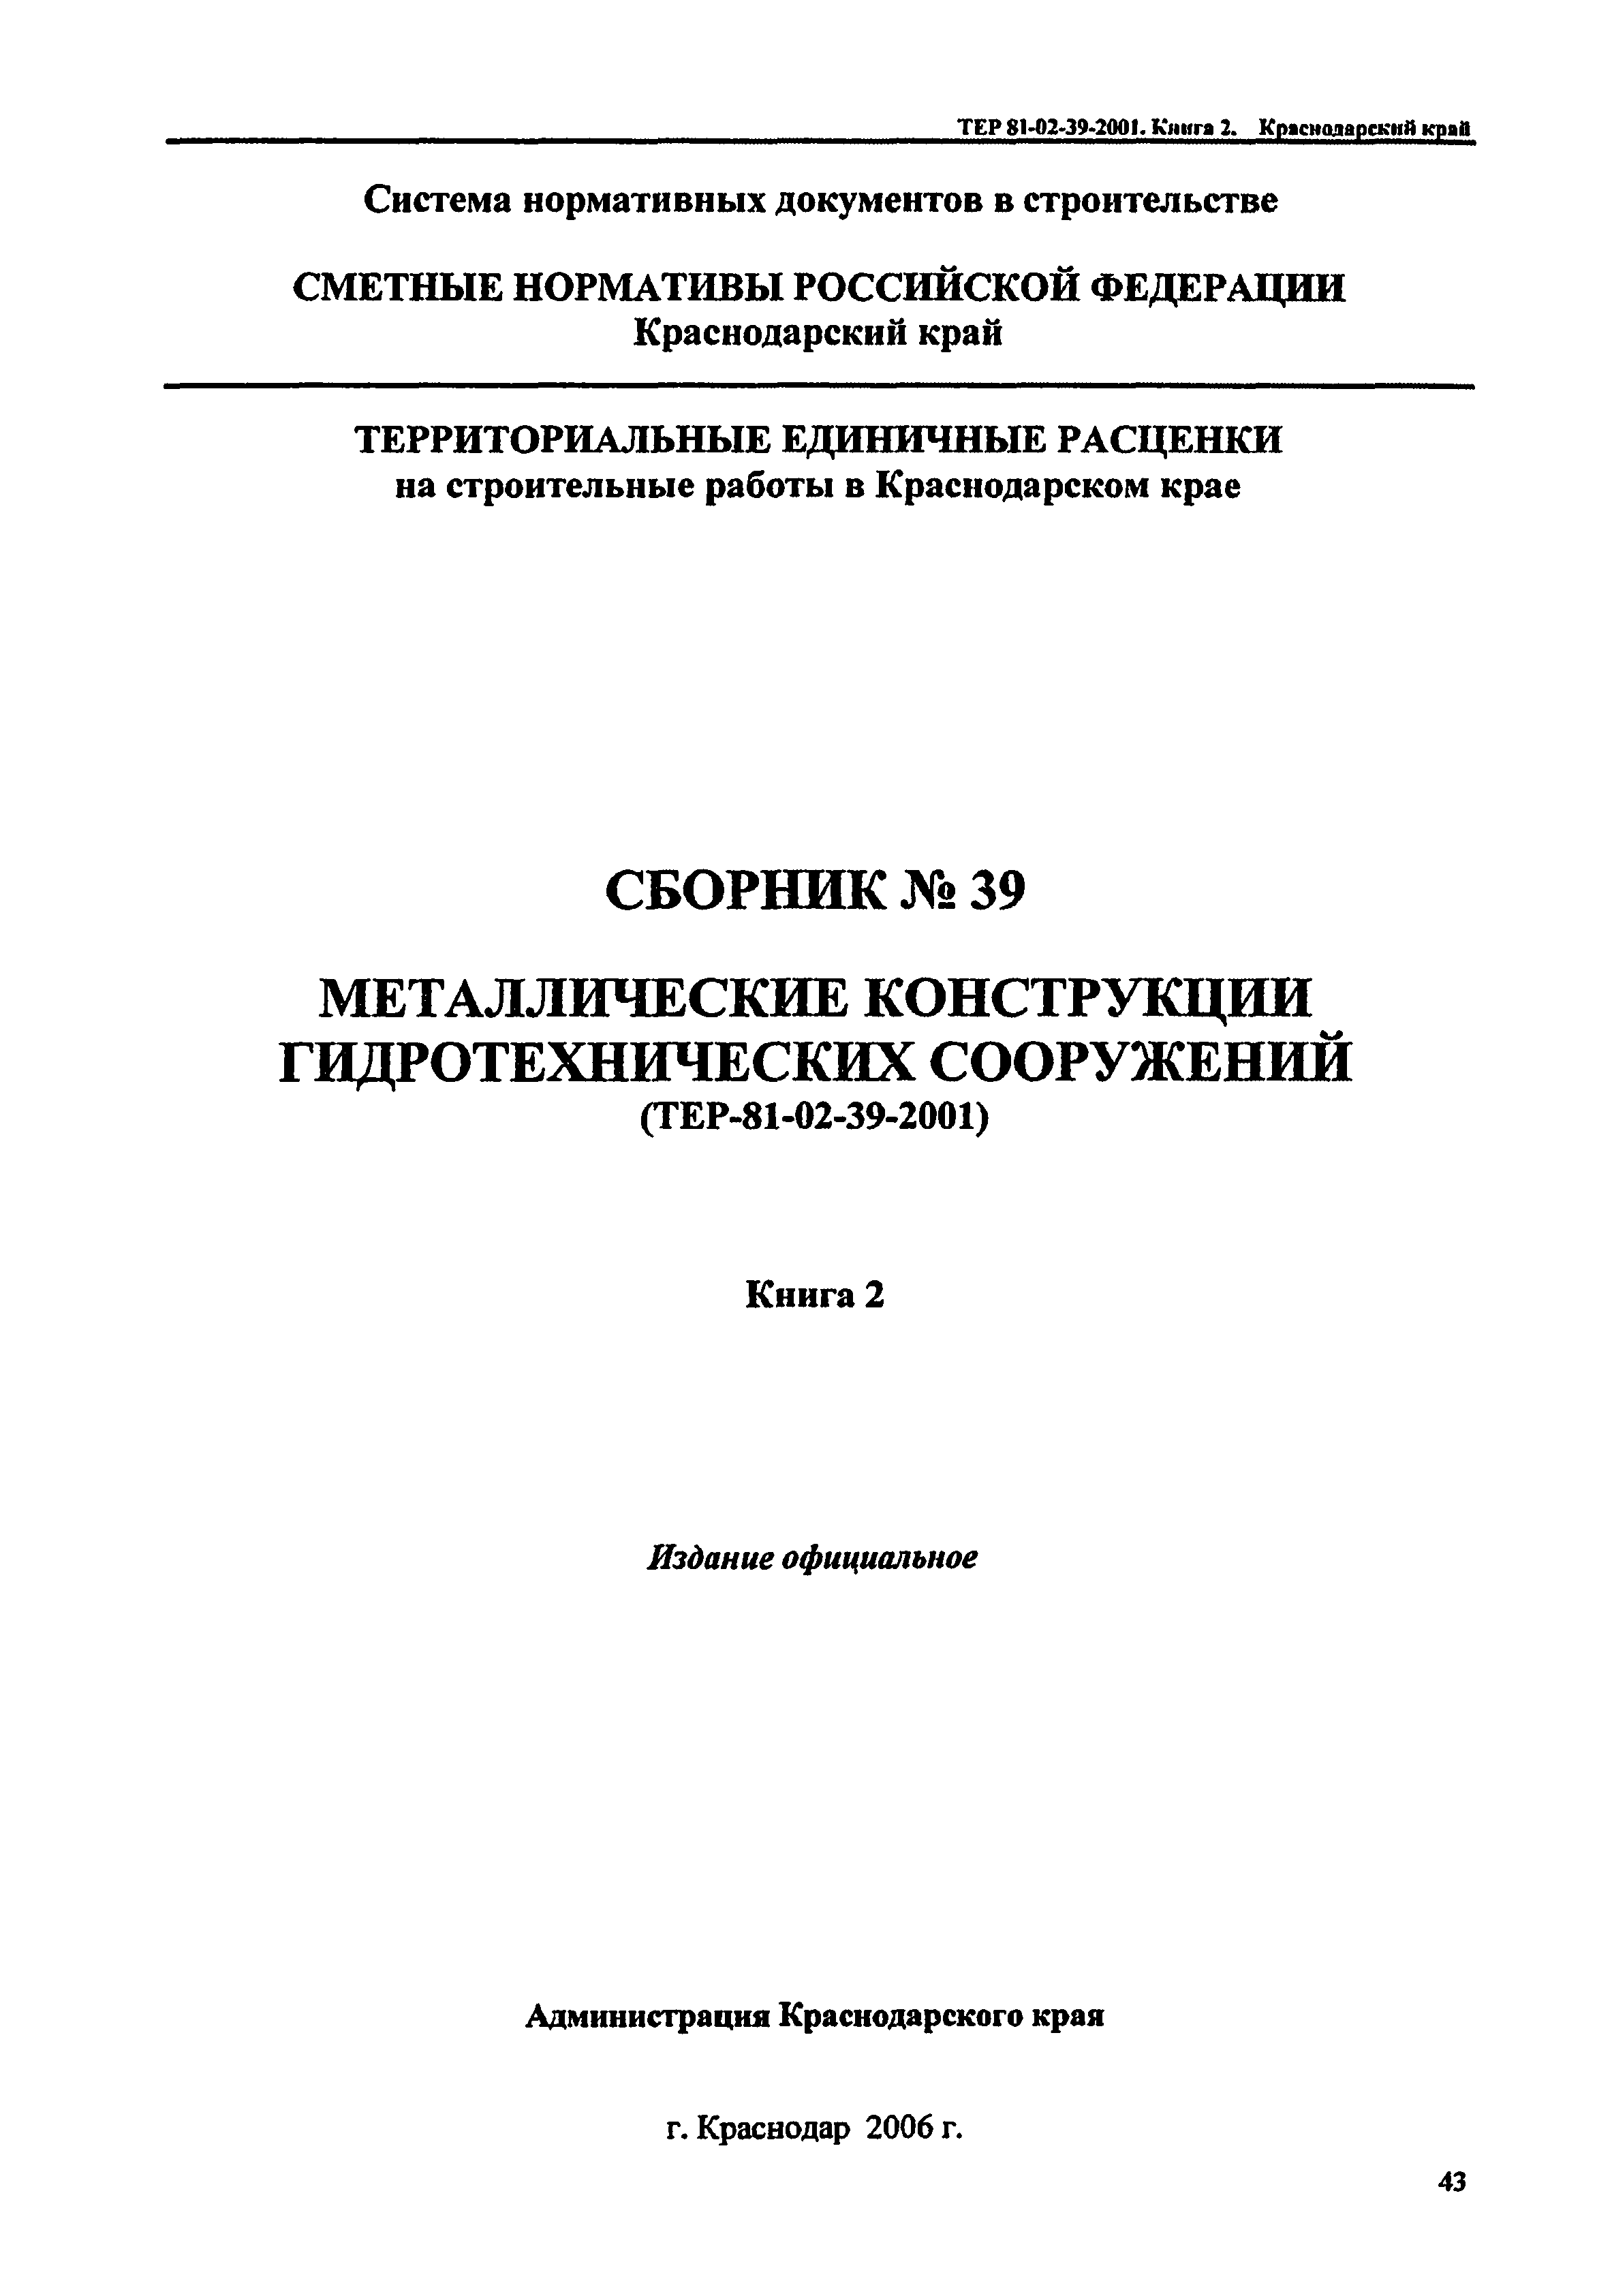 ТЕР Краснодарского края 2001-39